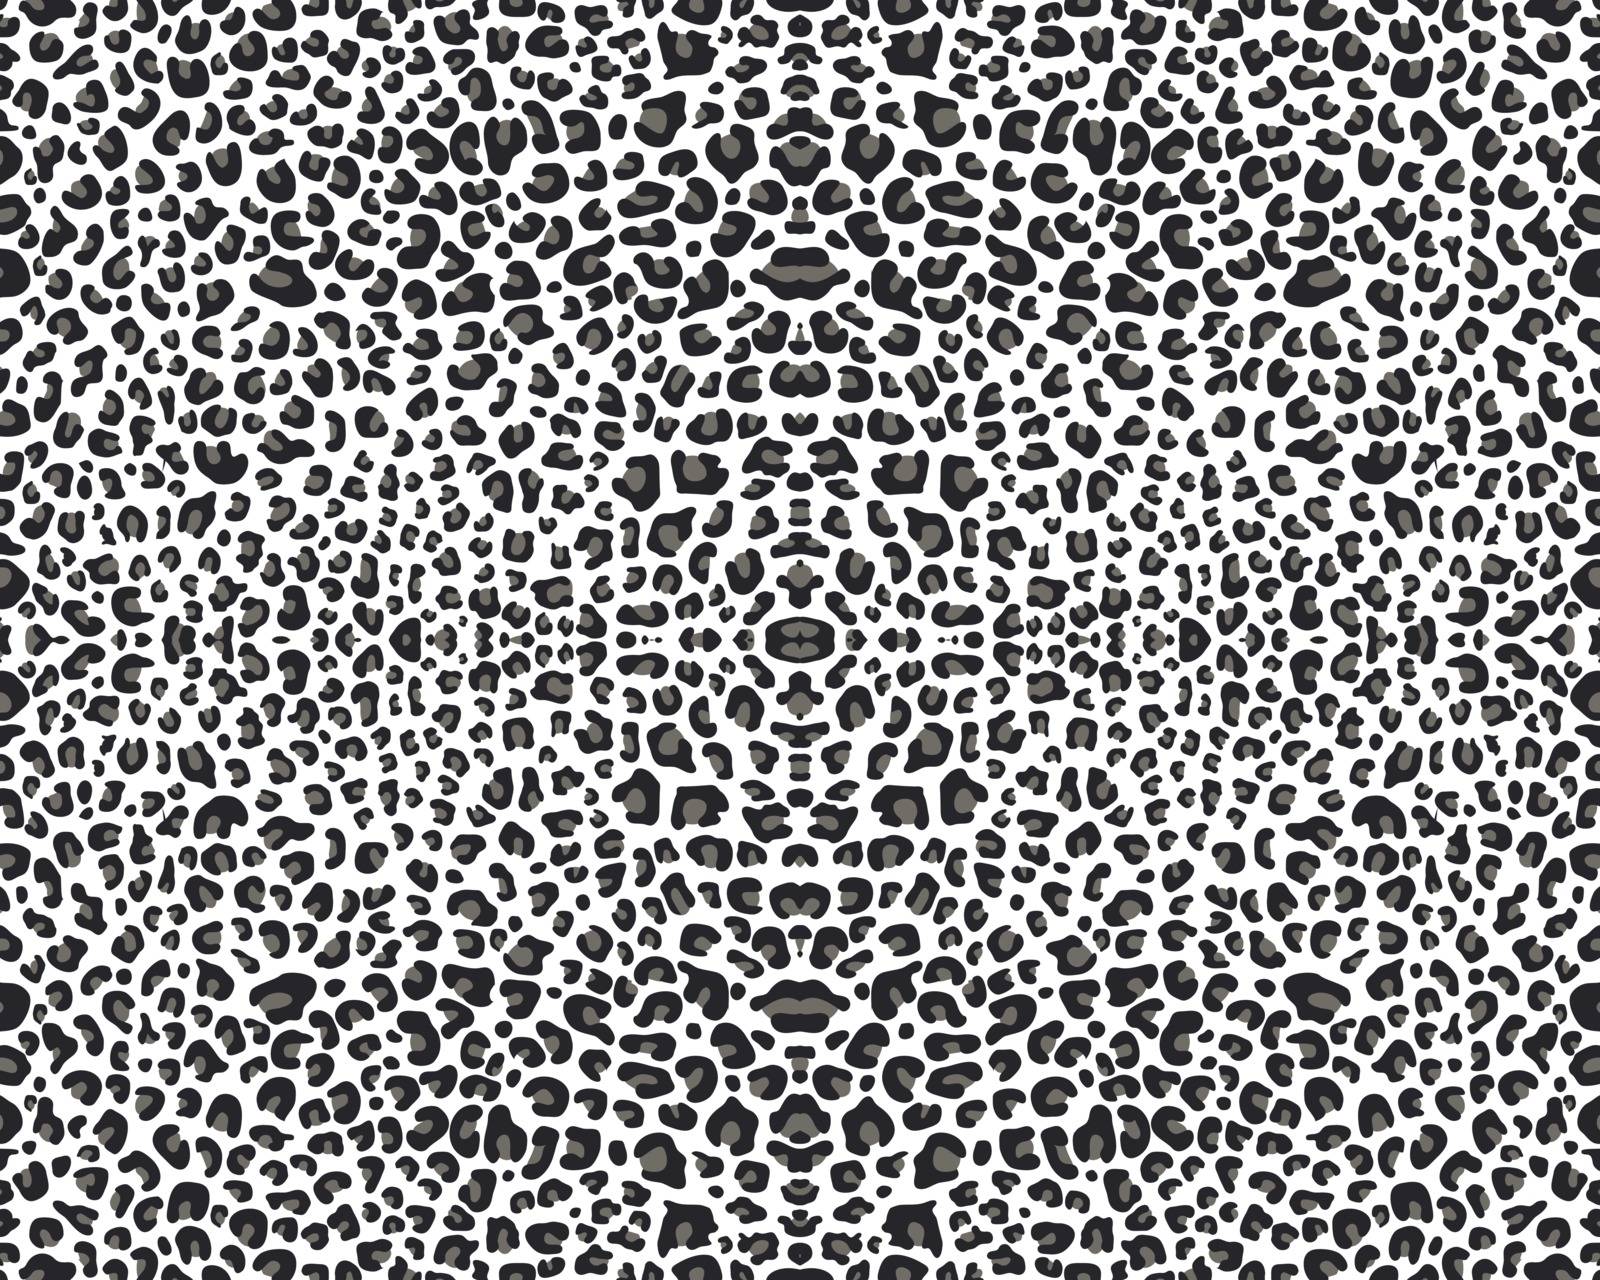 Seamless leopard repeat pattern by ratkomat